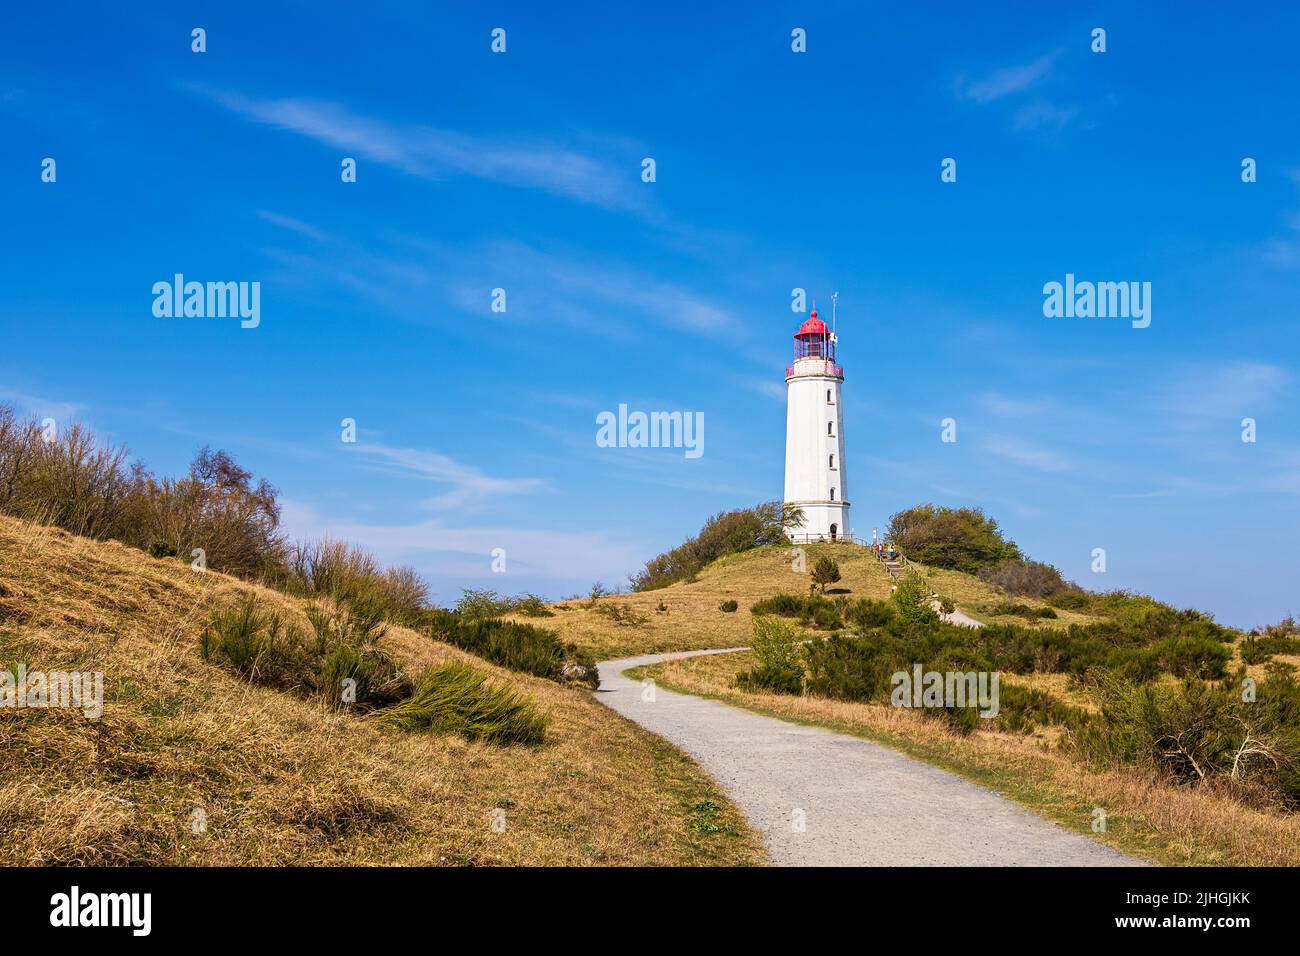 The lighthouse Dornbusch on the island Hiddensee, Germany. Stock Photo